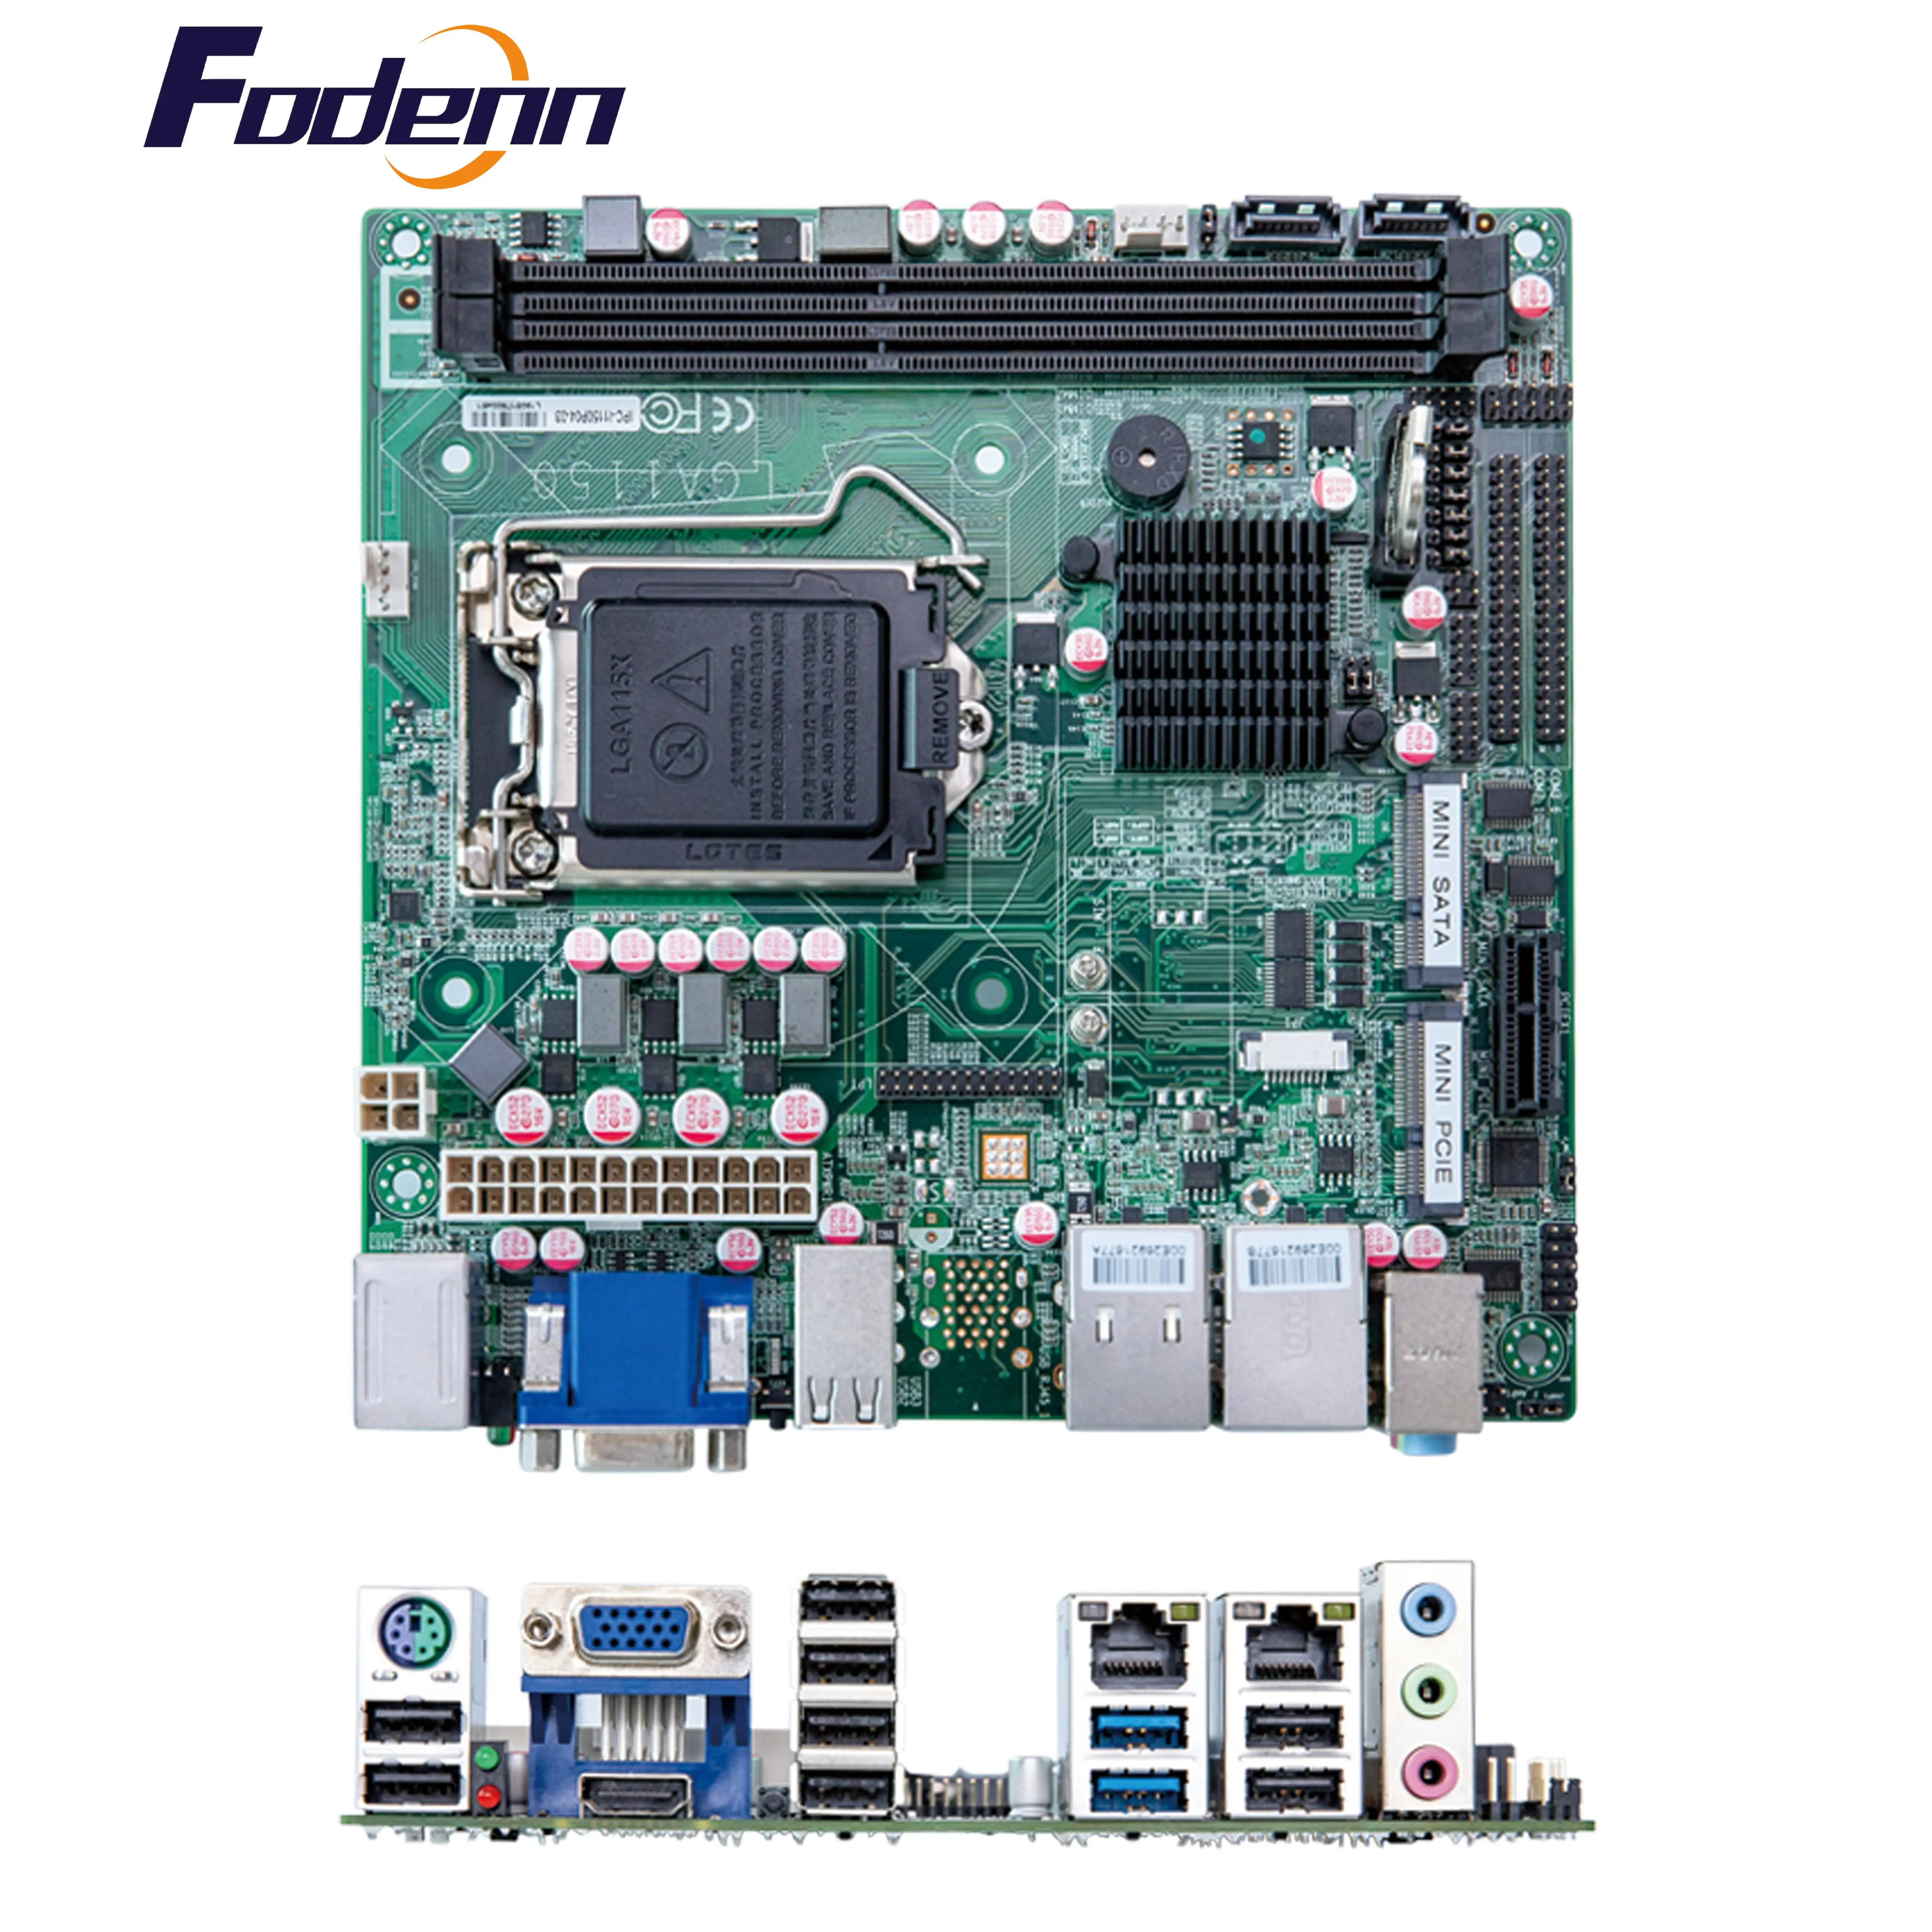 Fodenn Intel Haswell I3/I5/I7โปรเซสเซอร์2 * DIMM DDR3 3G/4G/WIFI รองรับเมนบอร์ดอุตสาหกรรม X86 MINI-ITX